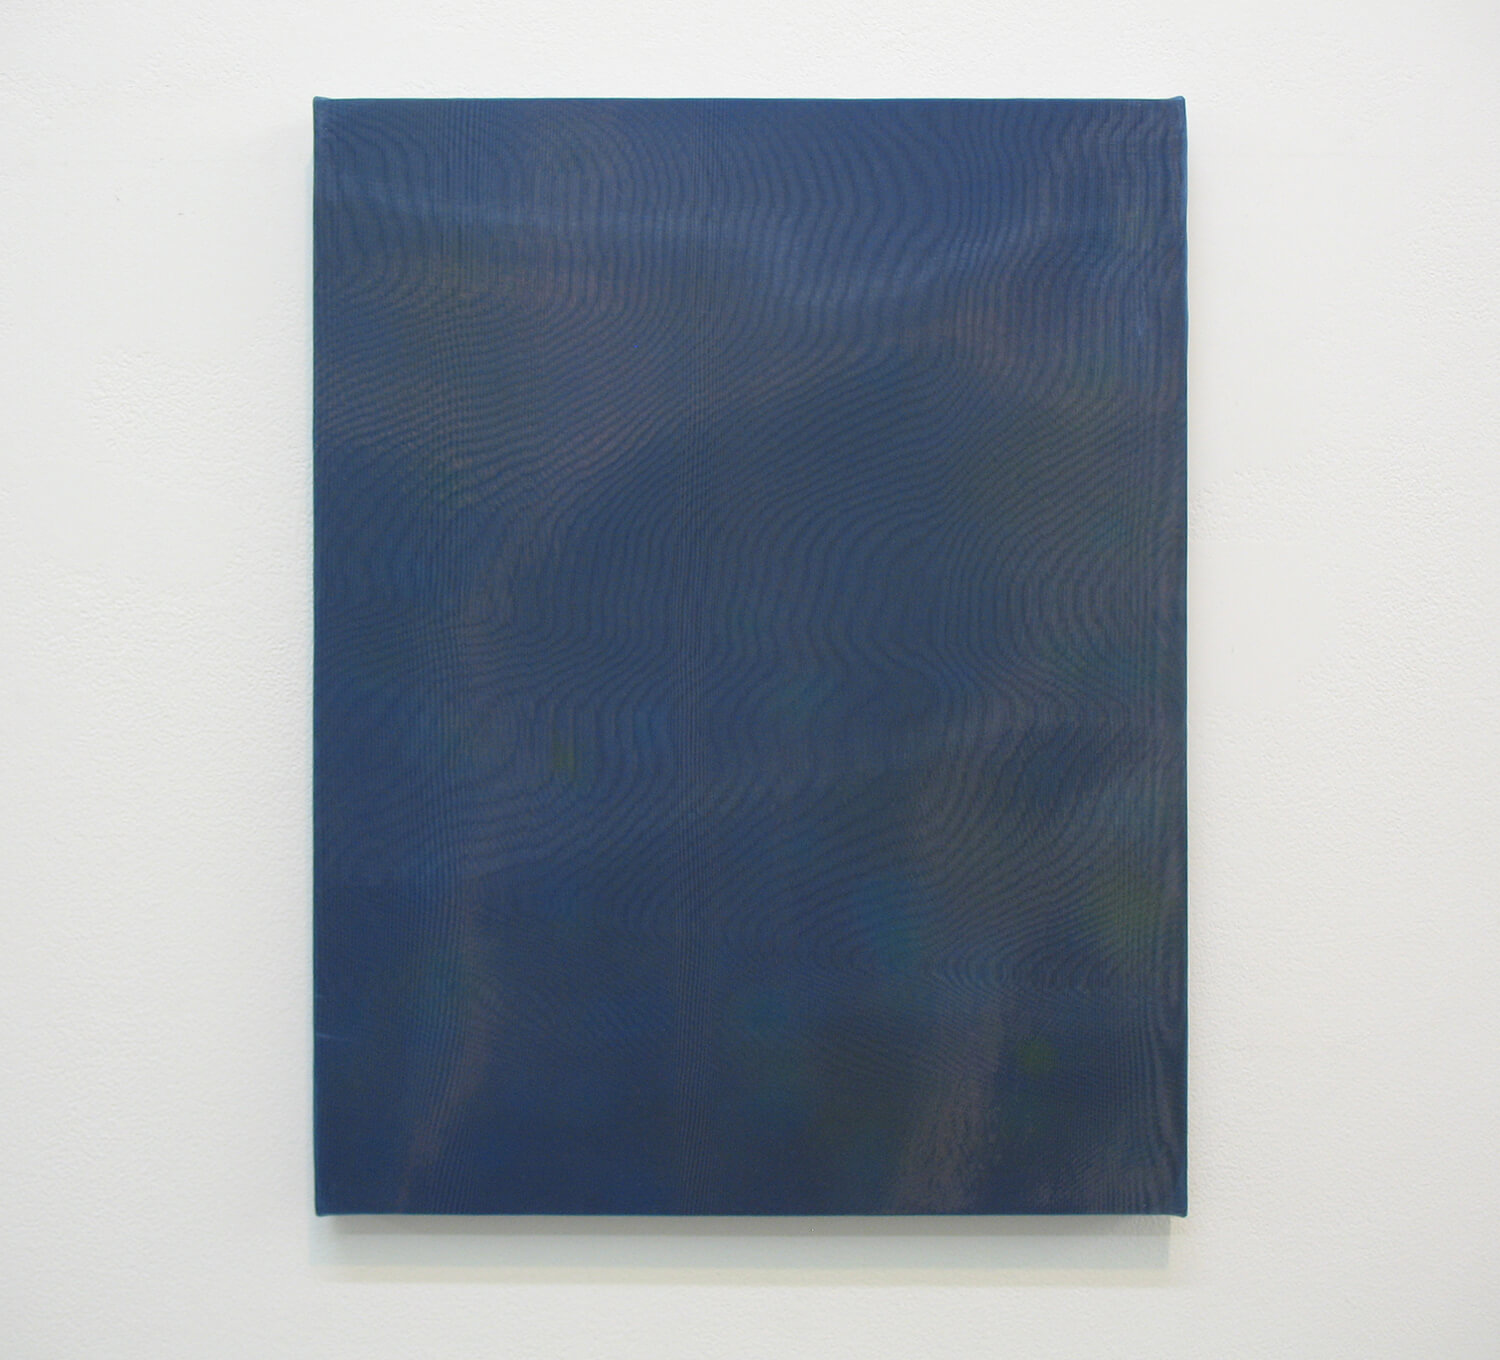 drops #3<br>
Acrylic, glass organdy, cotton, panel 41 x 33 cm 2013